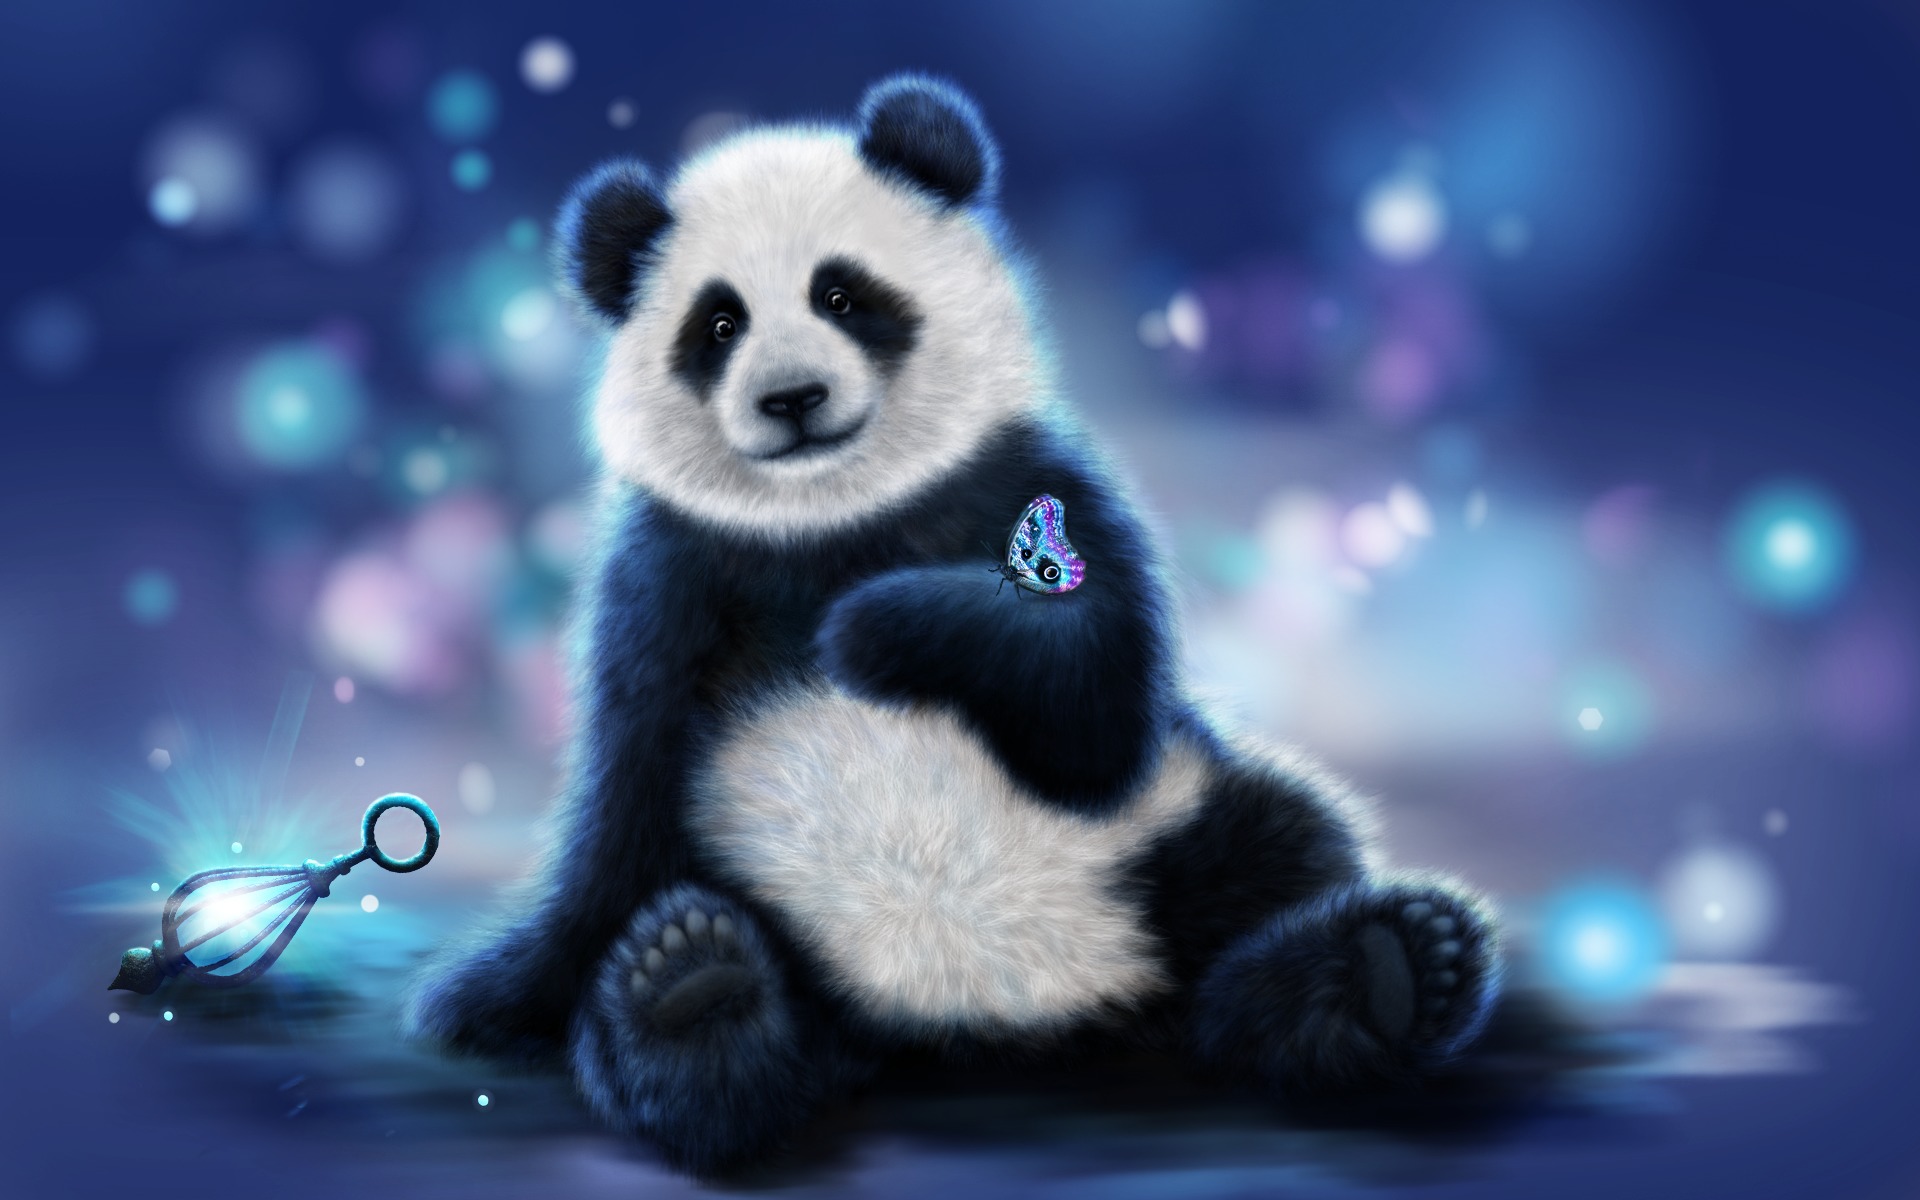 Download panda s for ile phone free panda hd pictures